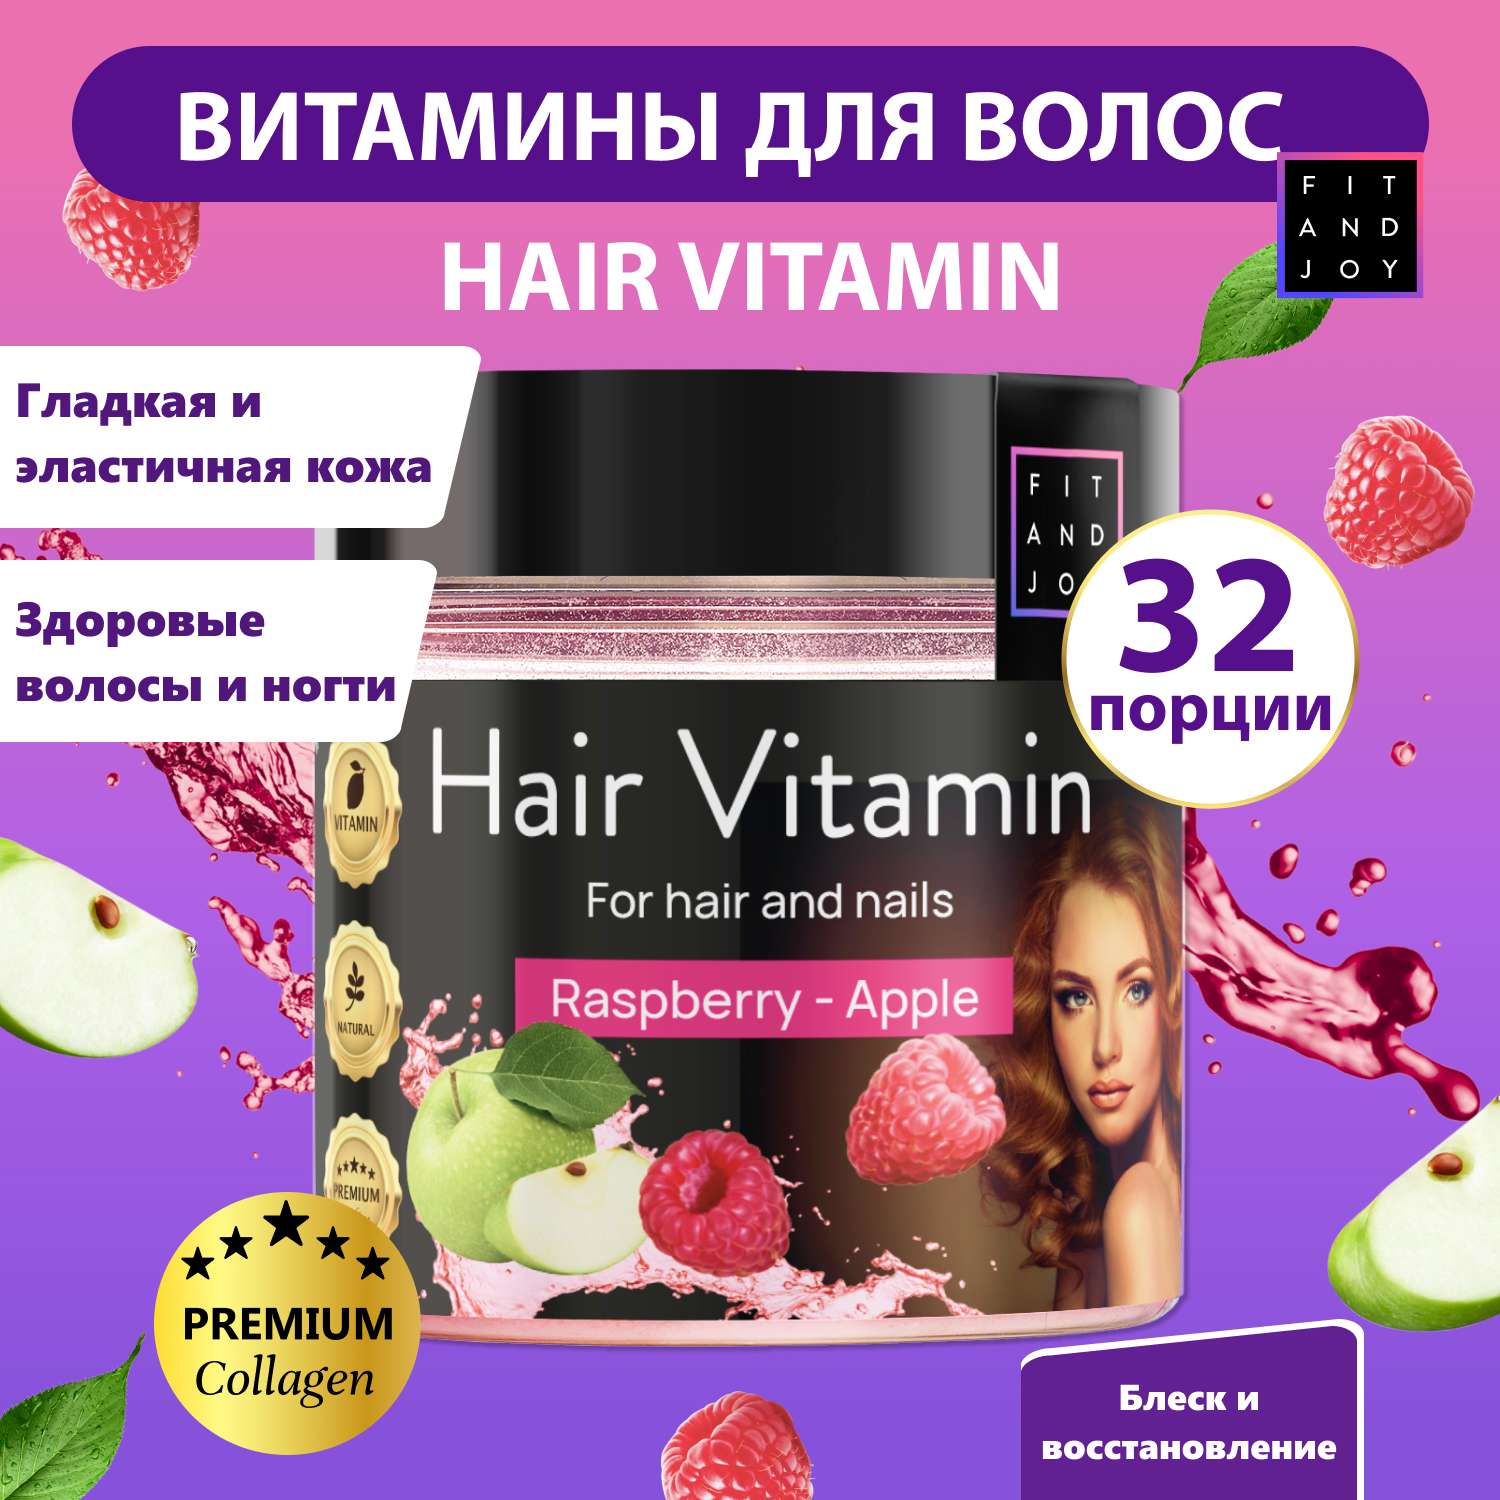 Витаминный комплекс FIT AND JOY Hair Vitamin - фото 2